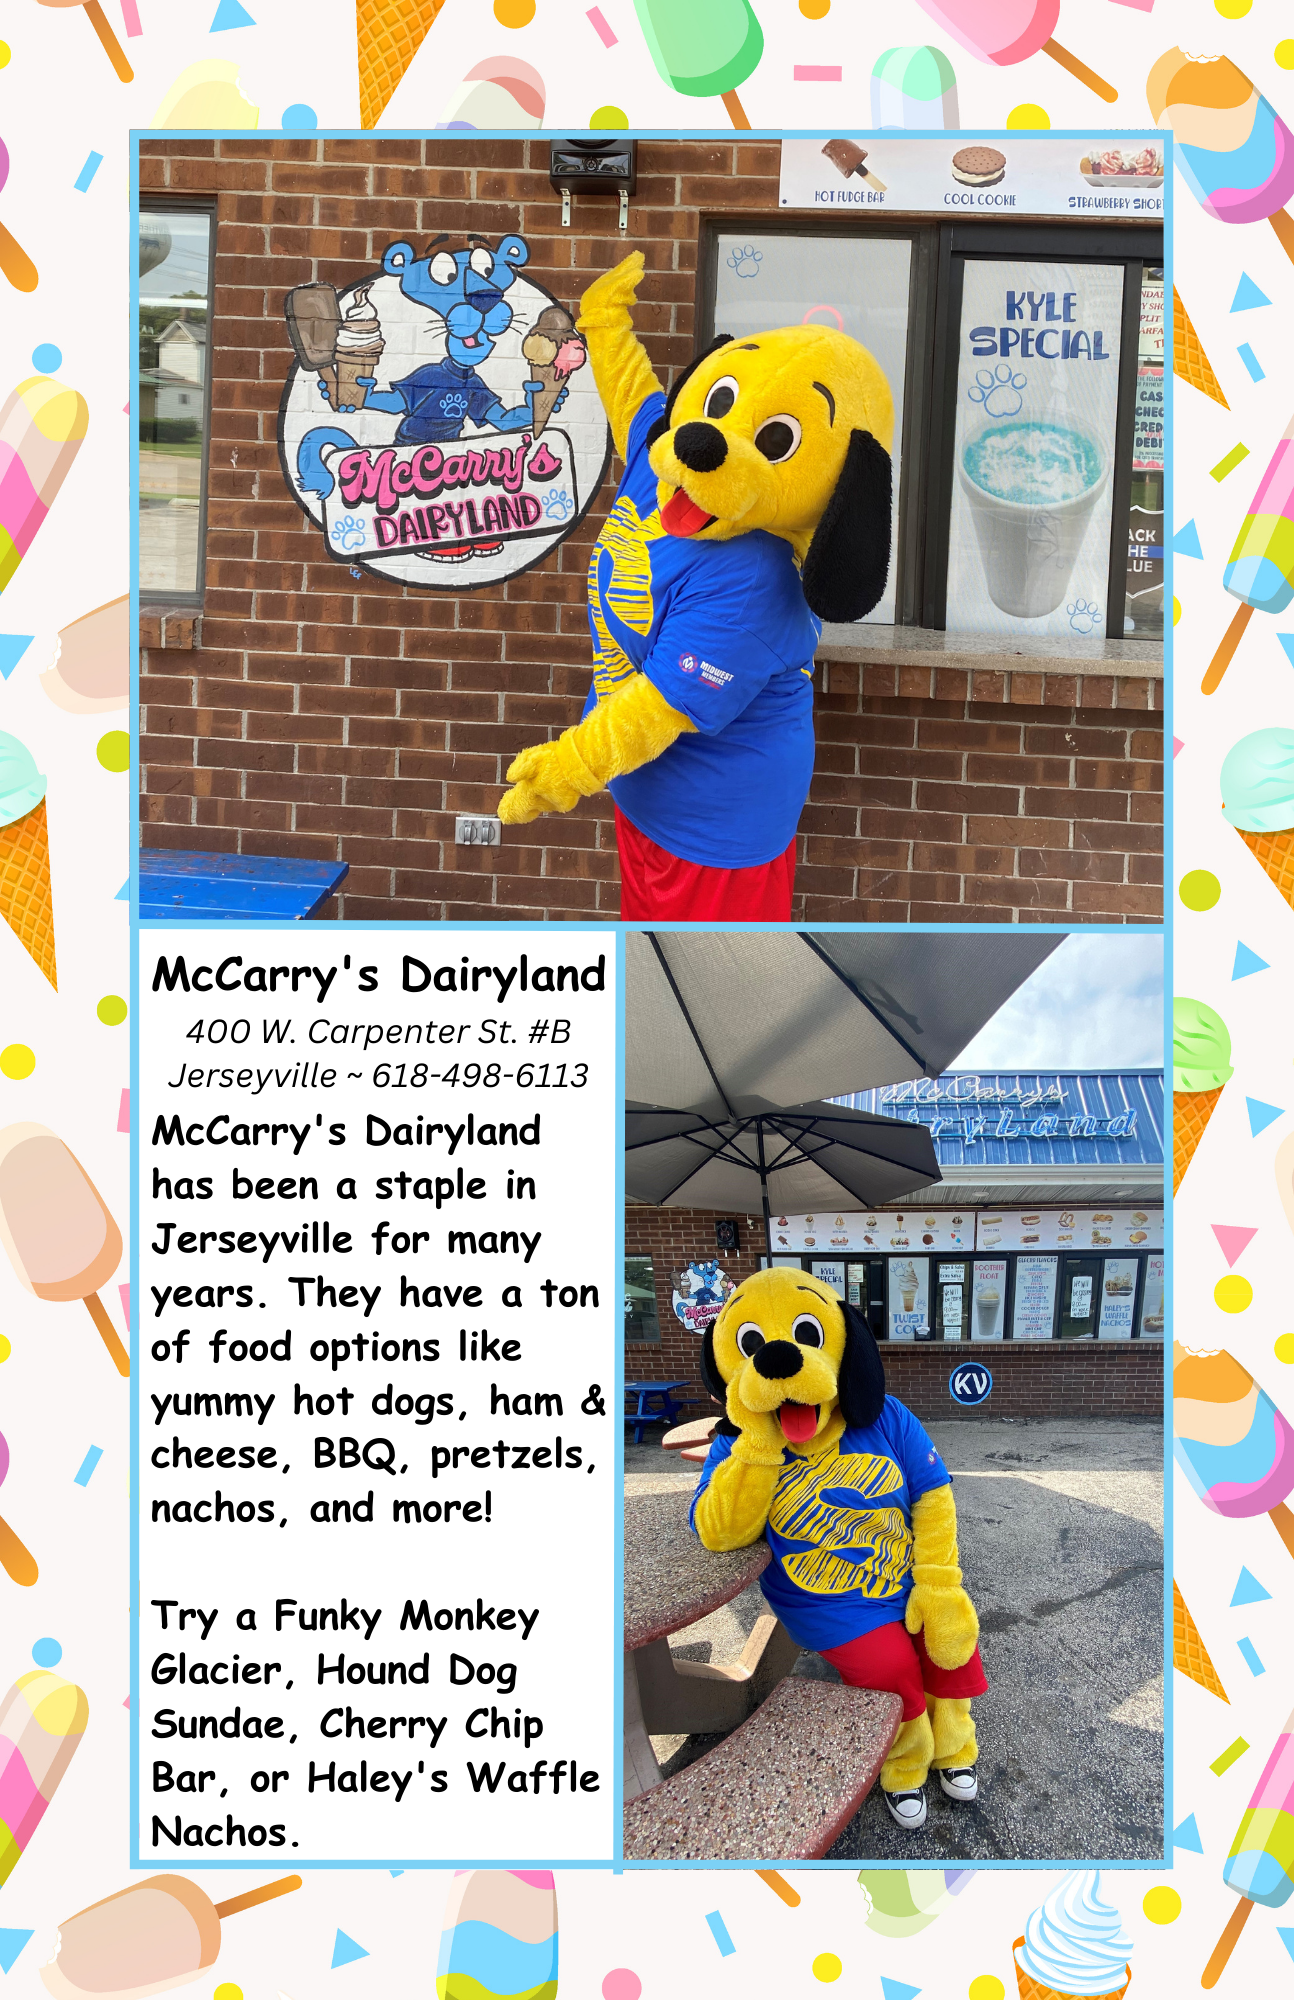 Money Dog at McCarry's Dairyland